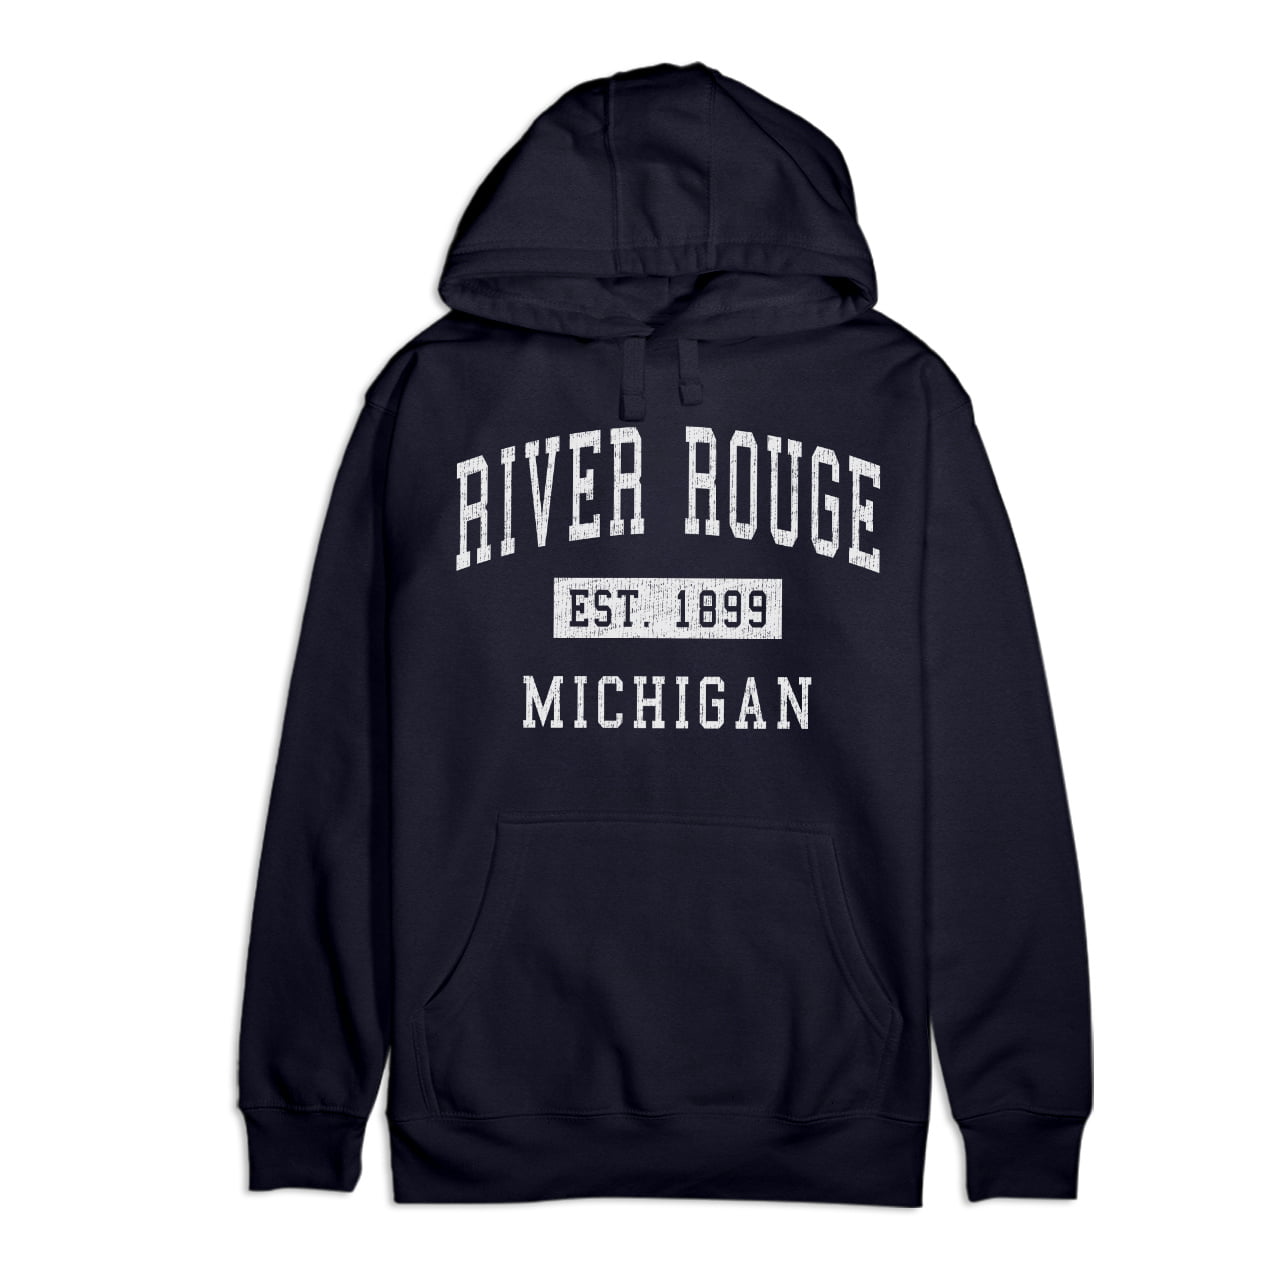 Men's Hoodies for sale in River Rouge, Michigan